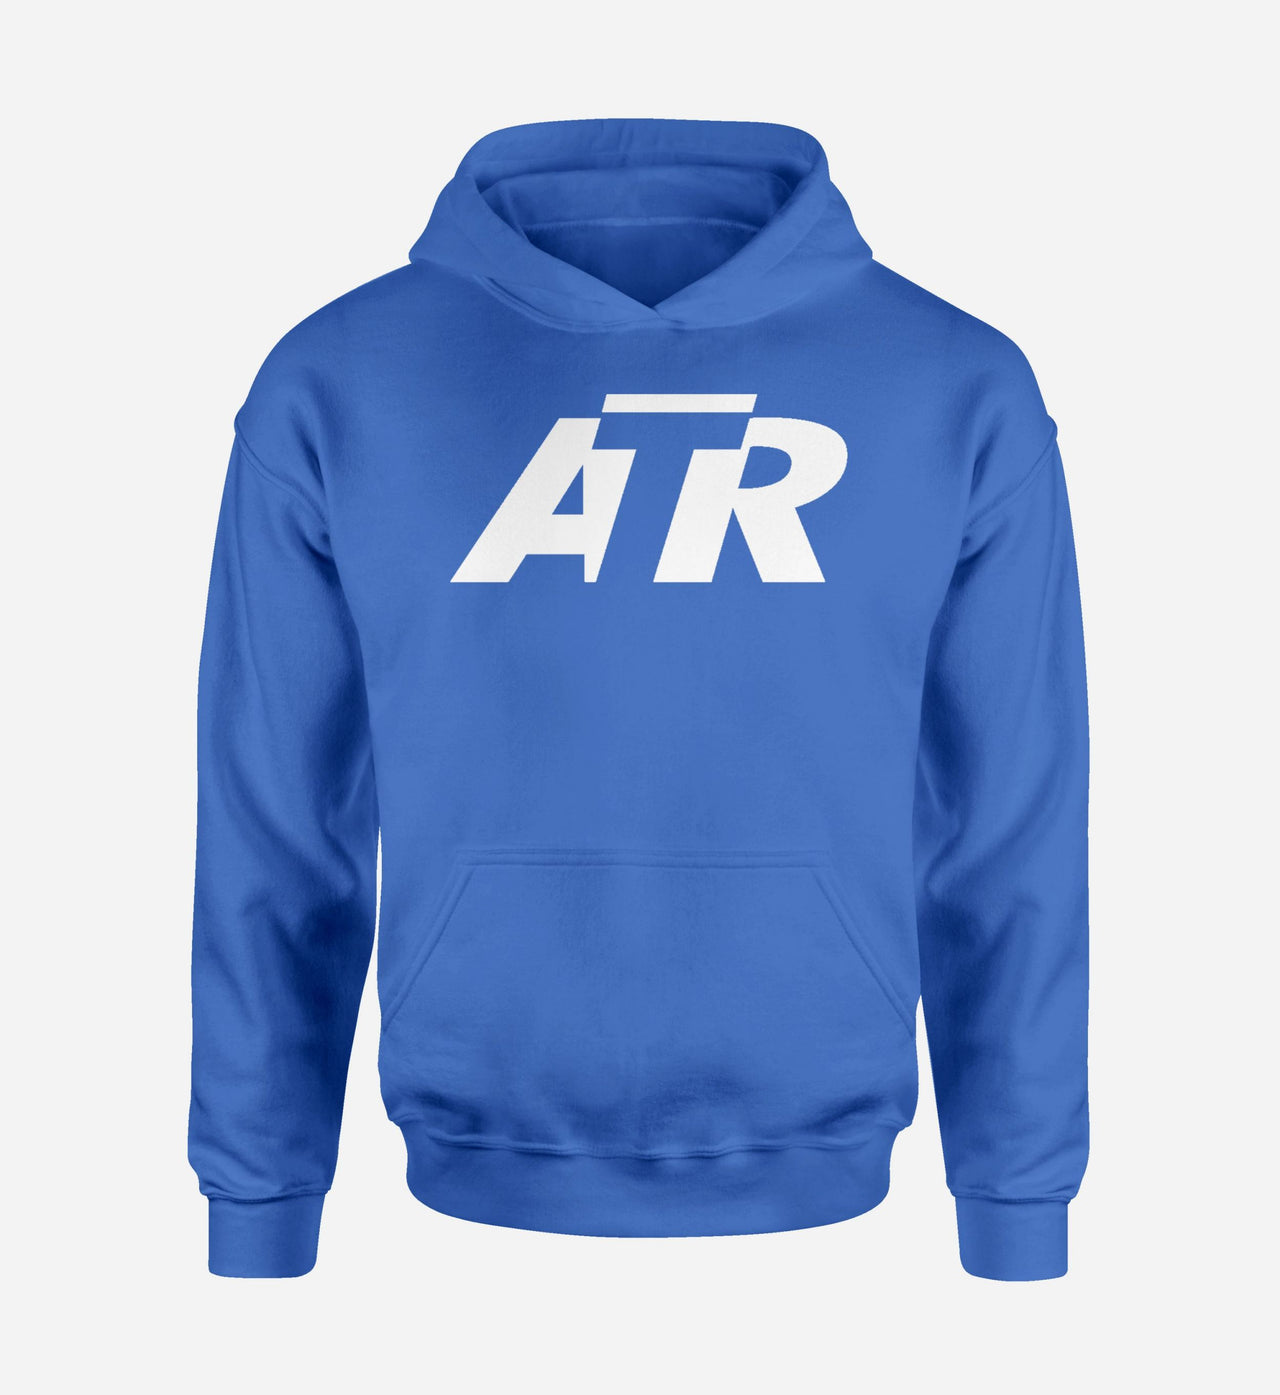 ATR & Text Designed Hoodies